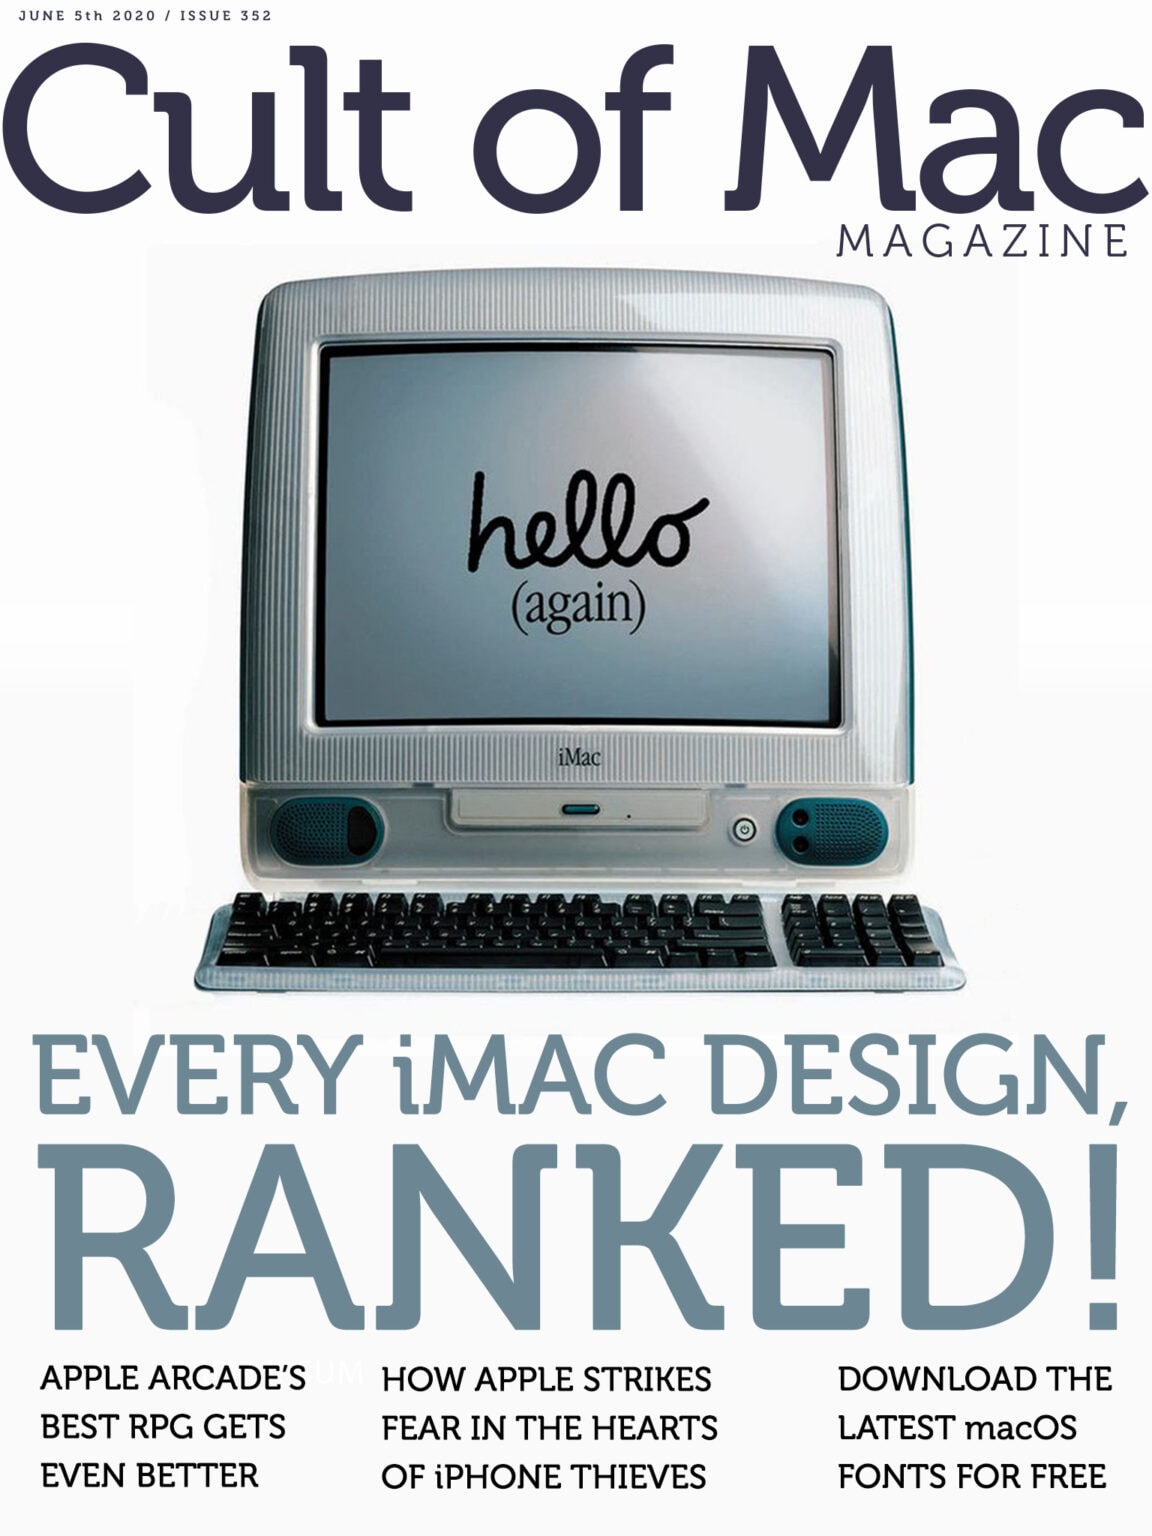 Every iMac design ranked.